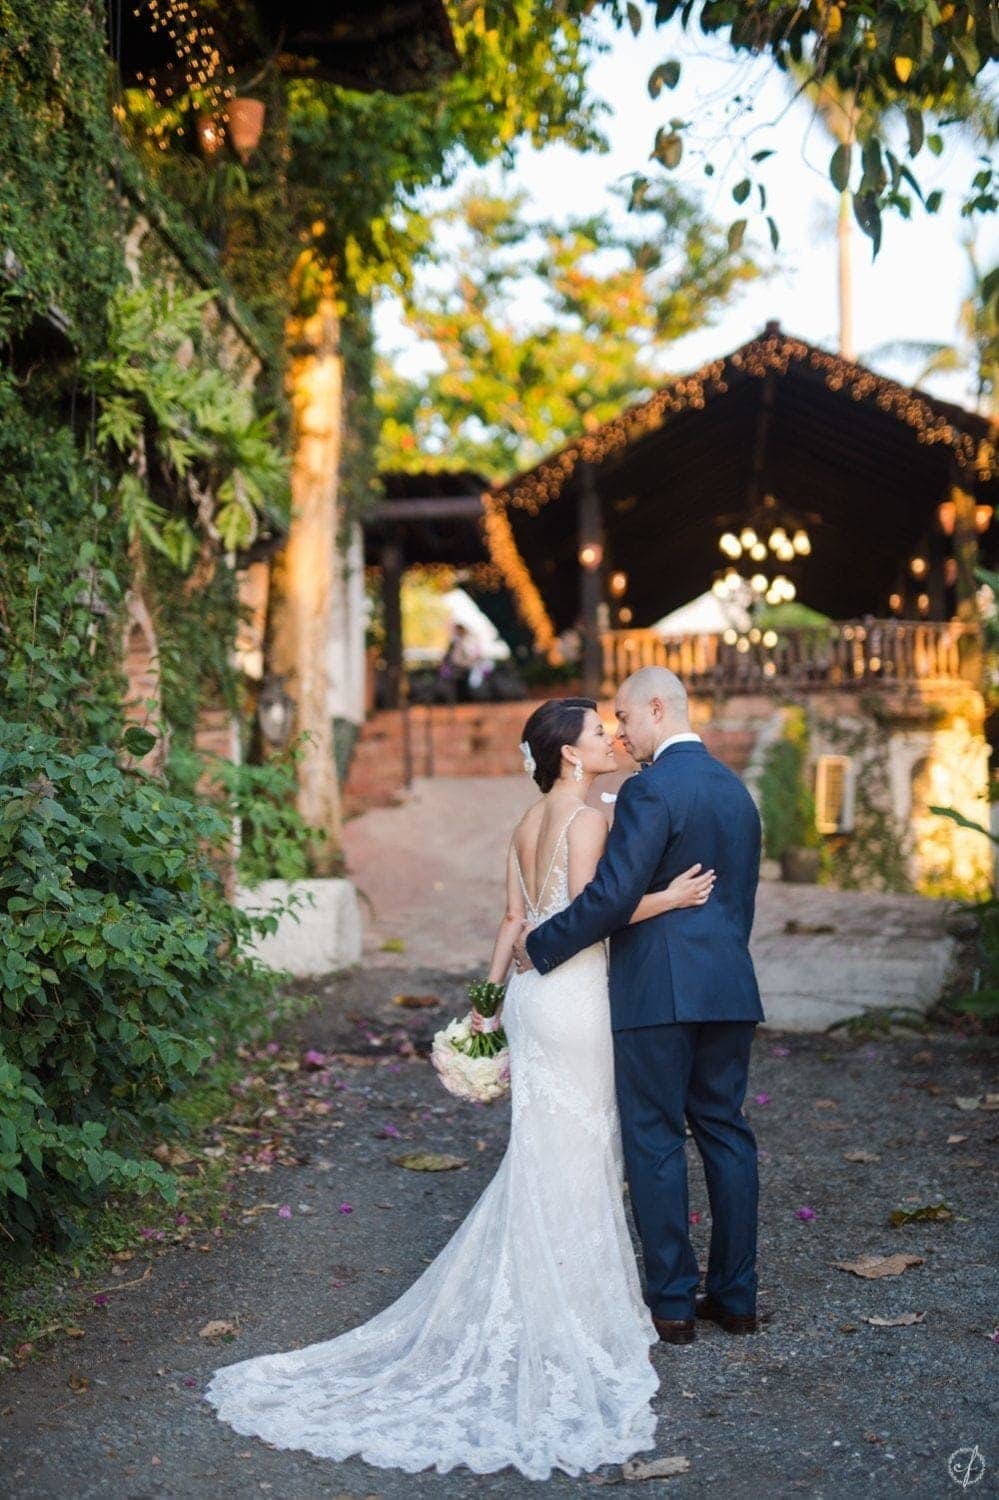 Puerto Rico wedding photographer Camille Fontanez shares a beautiful outdoor destination wedding at Hacienda Rio Grande